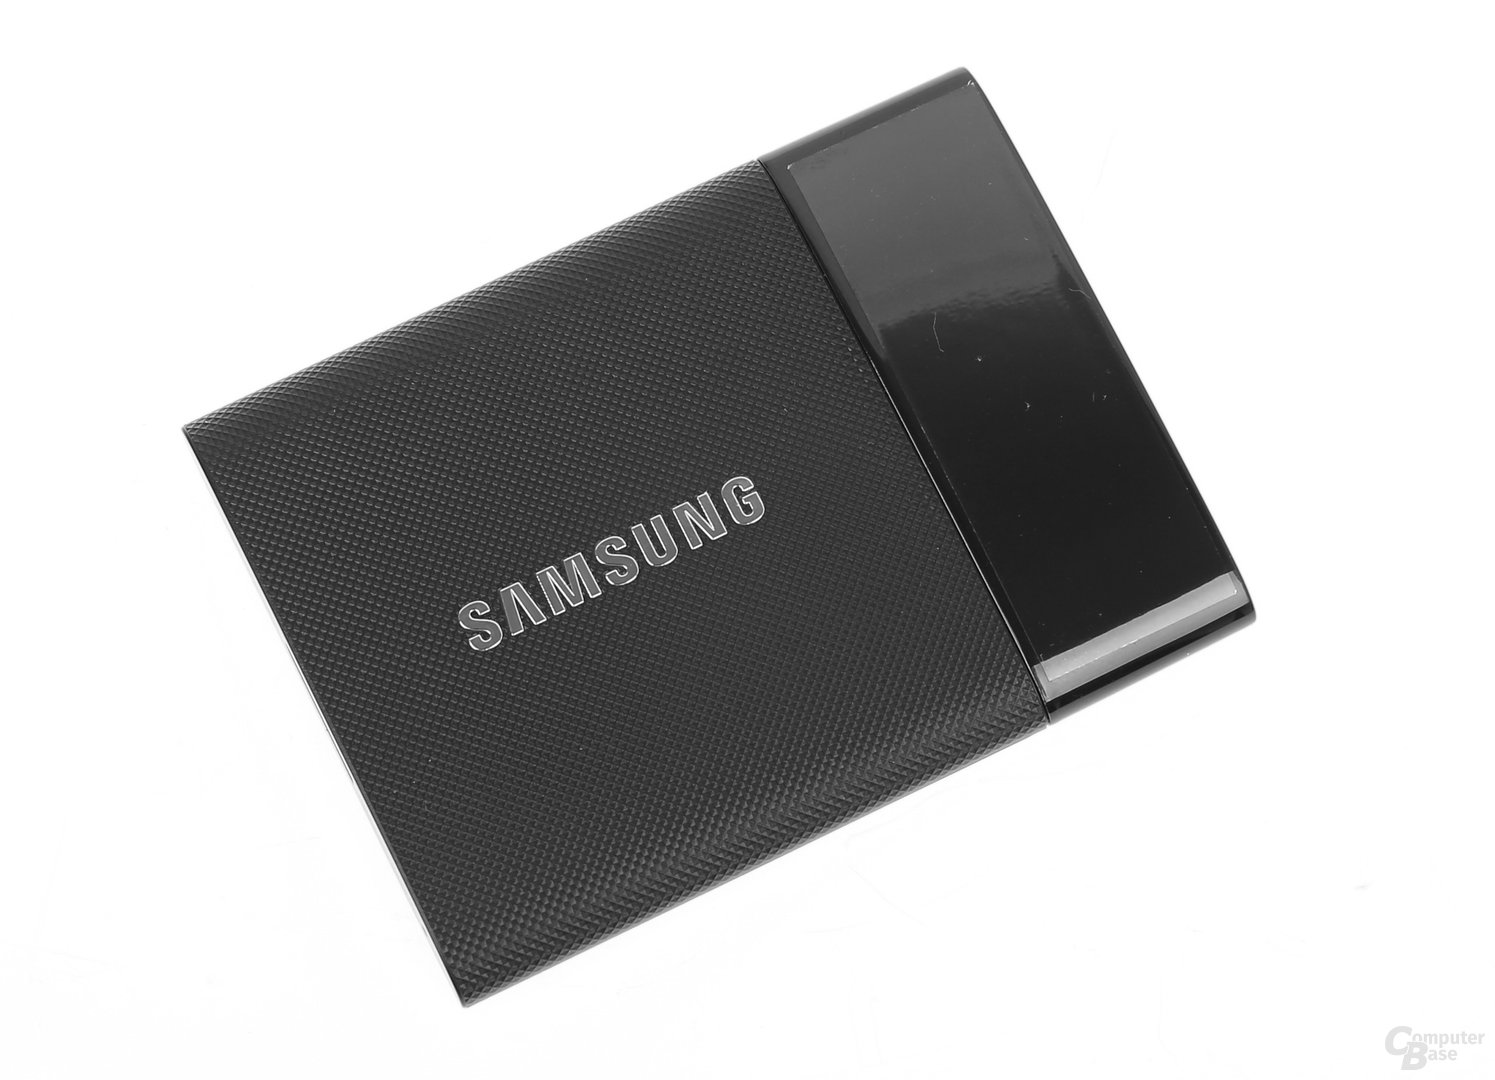 Samsung Portable SSD T1